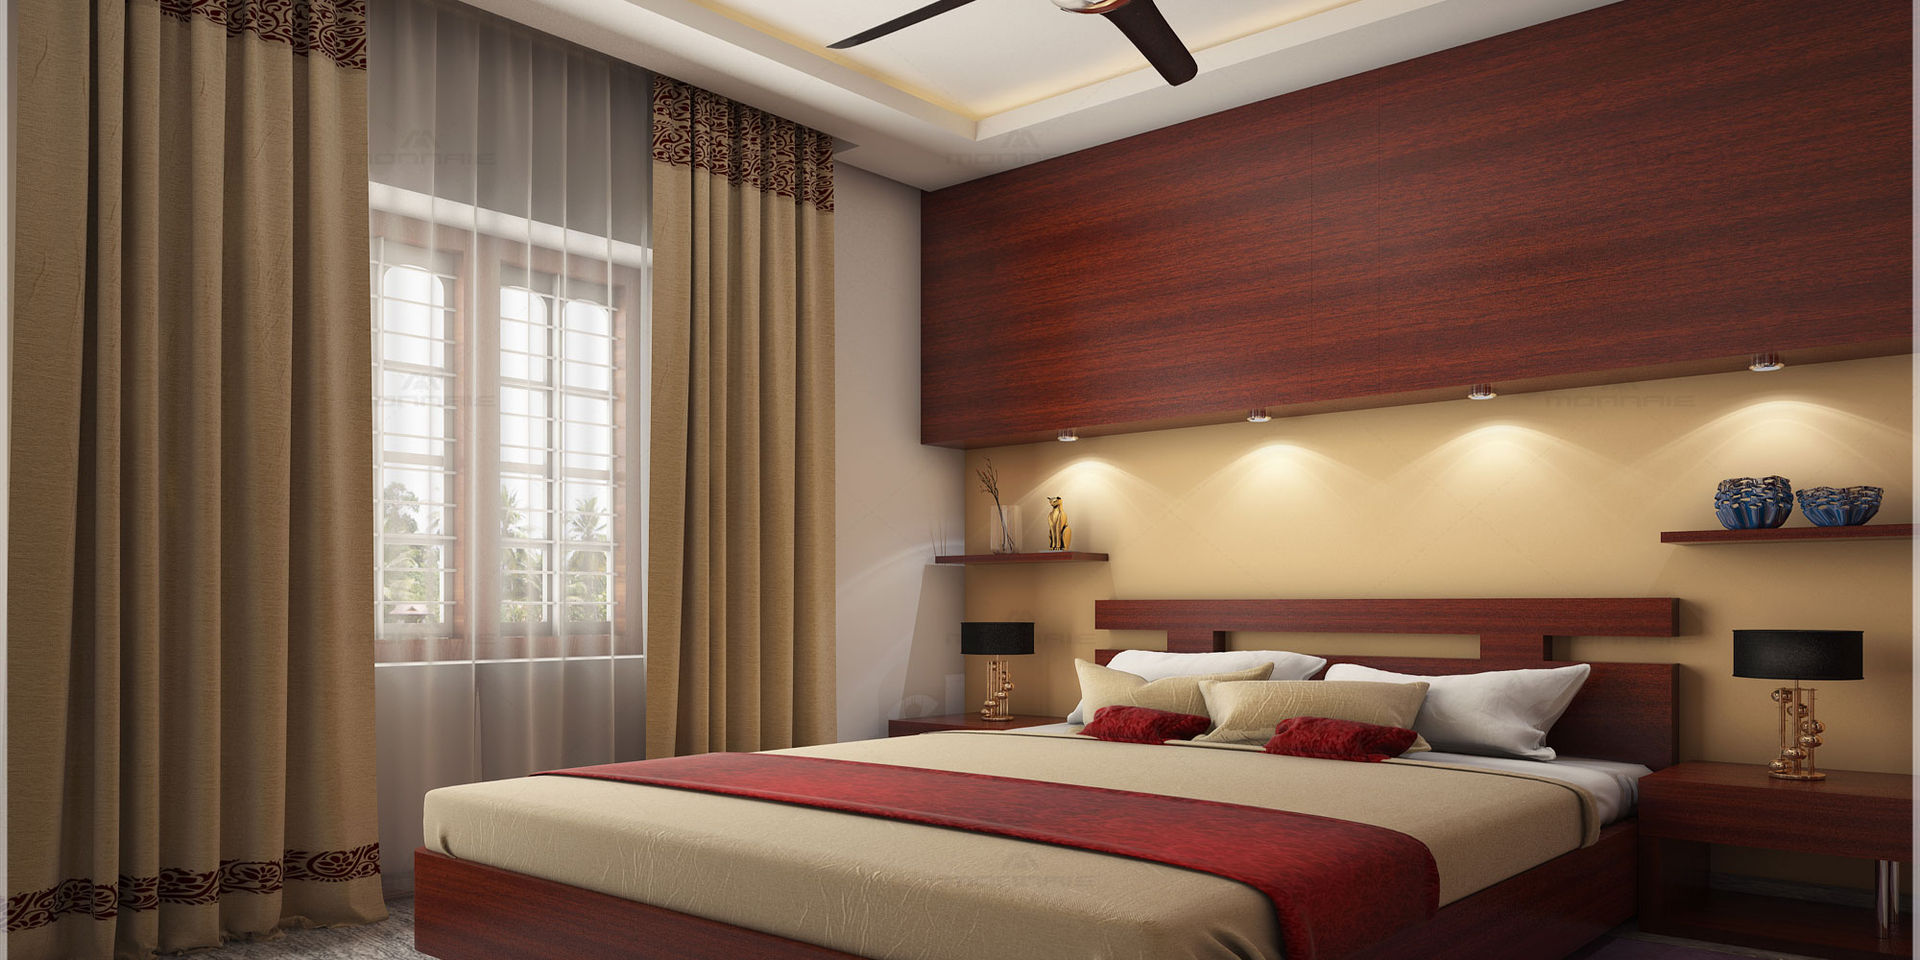 Magnificent, Premdas Krishna Premdas Krishna Classic style bedroom